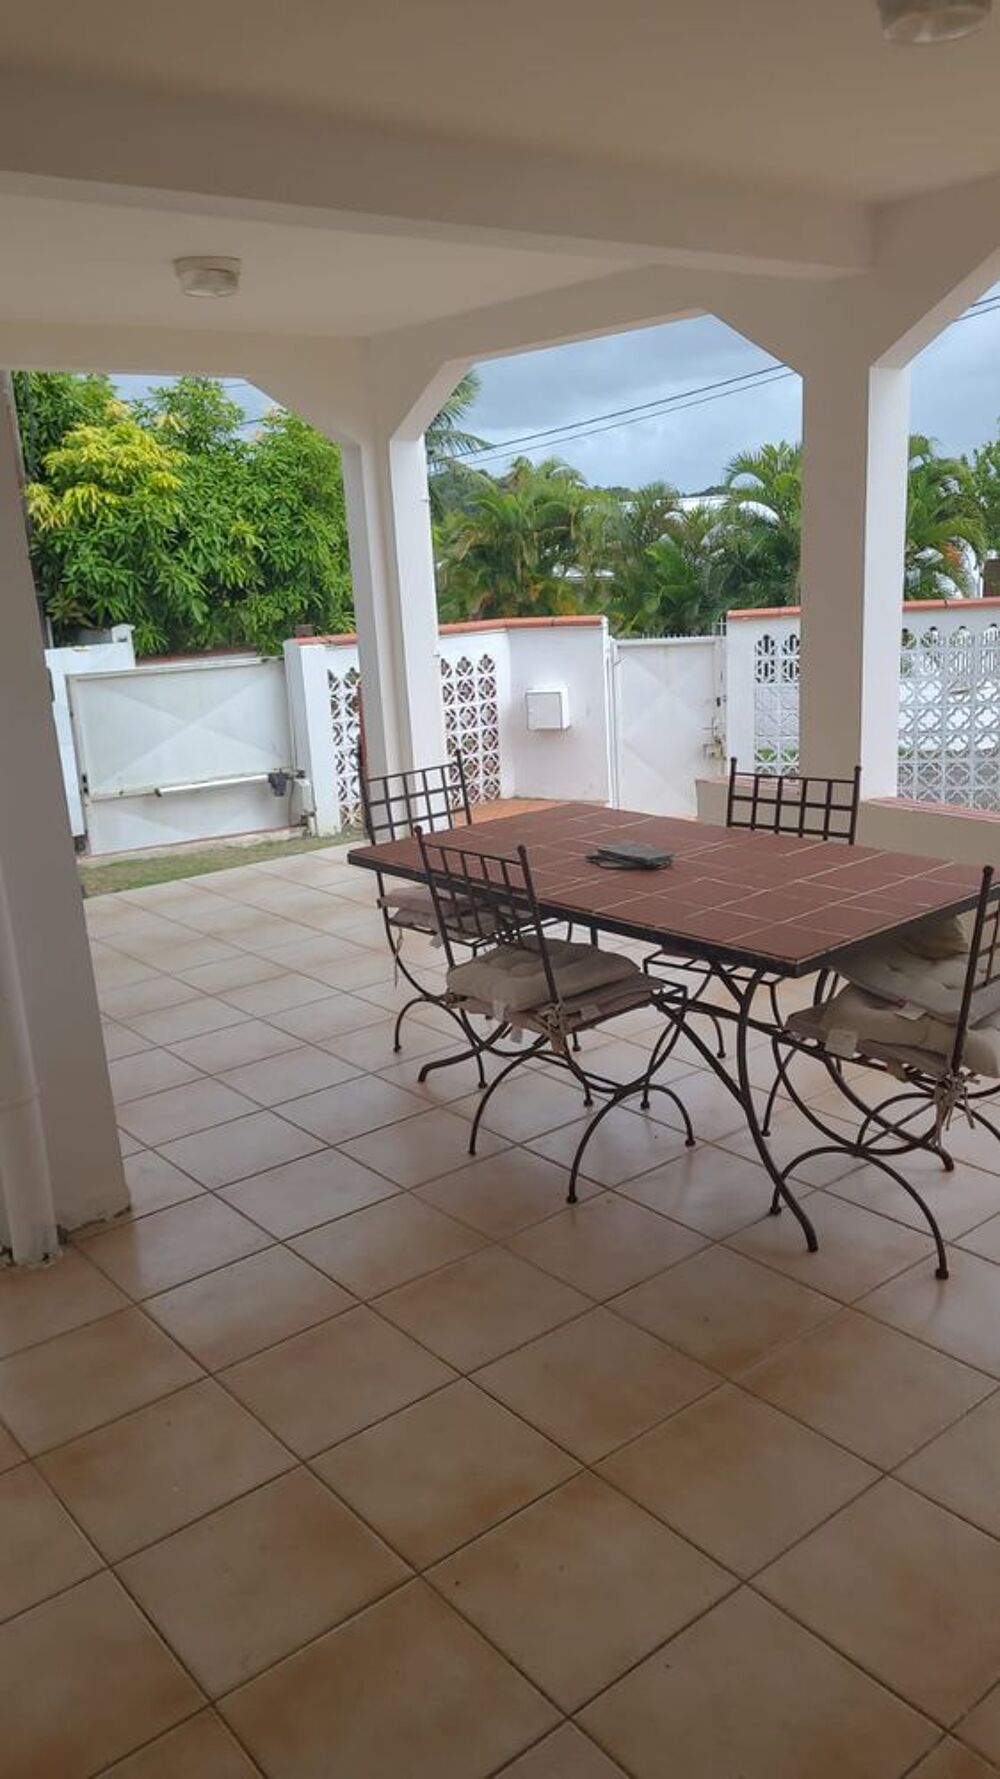   Martinique - Studio avec terrasse et jardin DOM-TOM, Schlcher (97233)